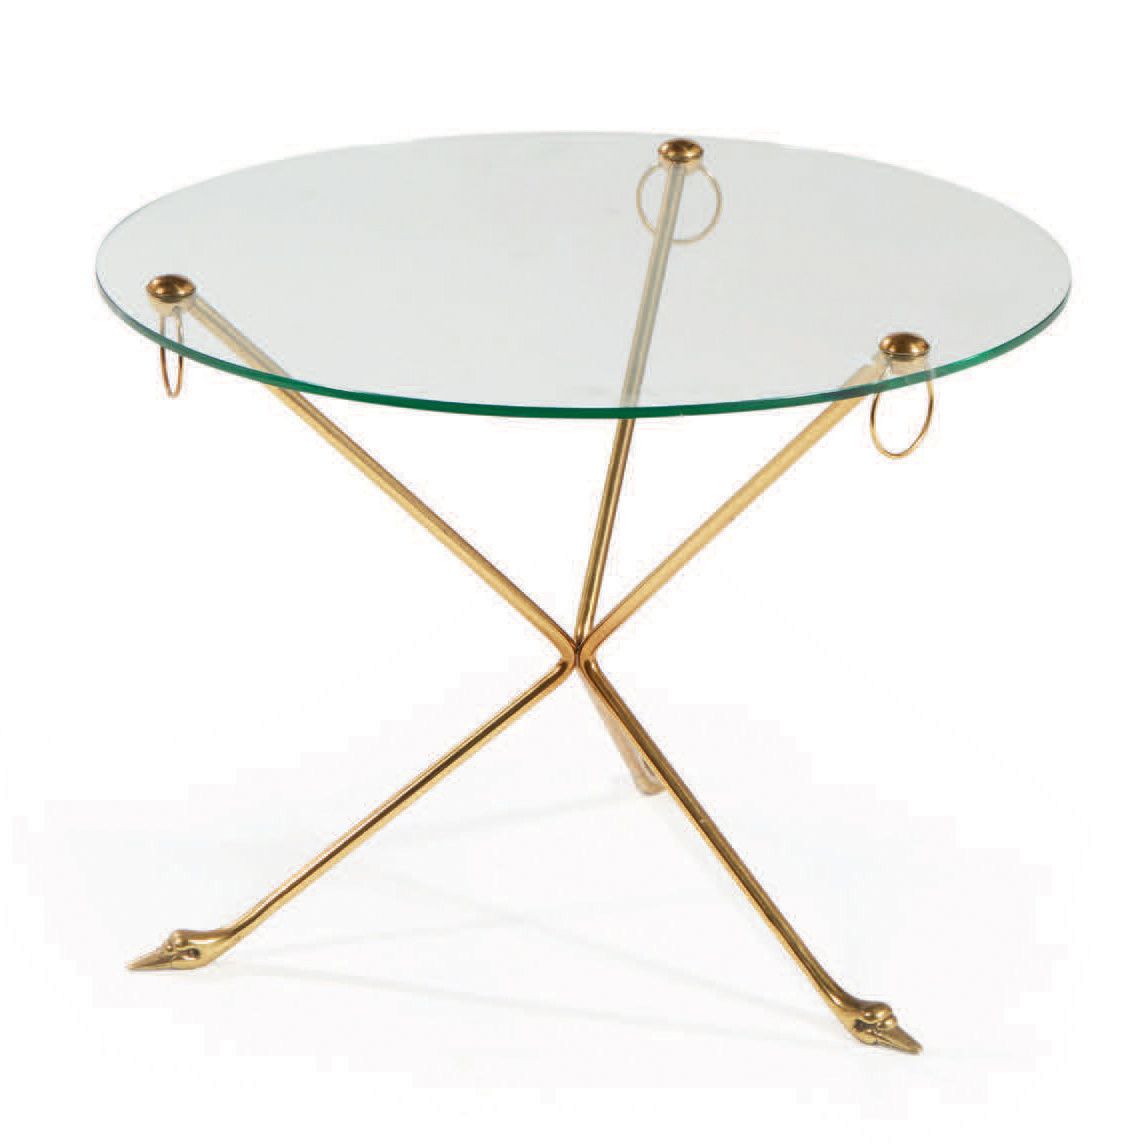 TRAVAIL FRANÇAIS 茶几，圆形玻璃桌面，放在一个弯曲的天鹅头三脚架底座上
高：44 直径：60厘米